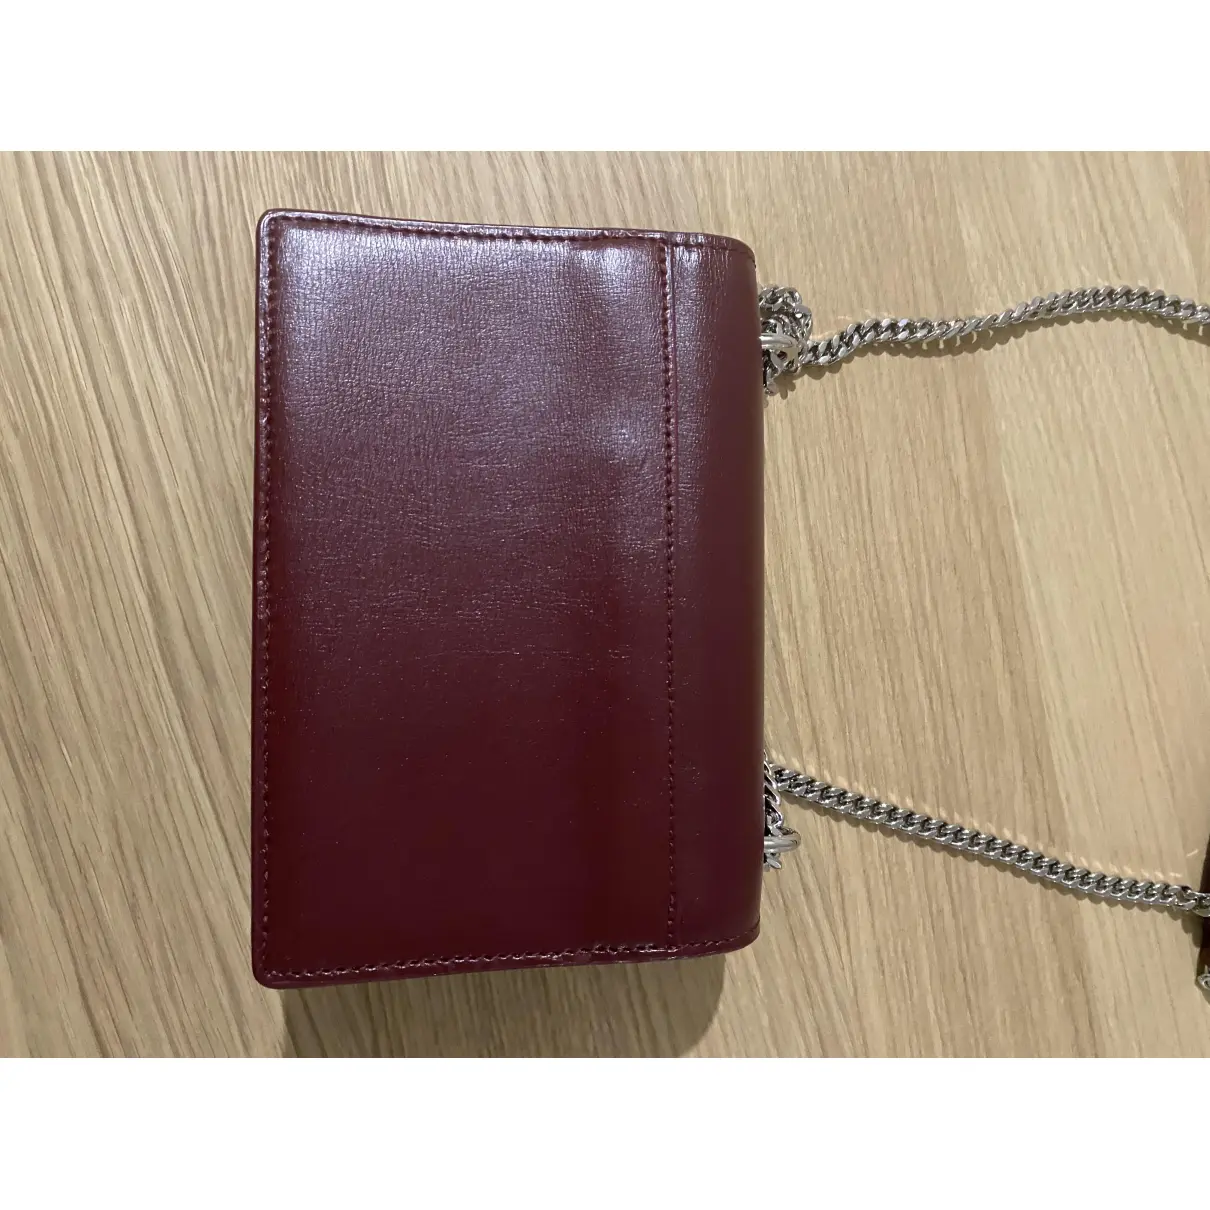 Buy Saint Laurent Sunset leather handbag online